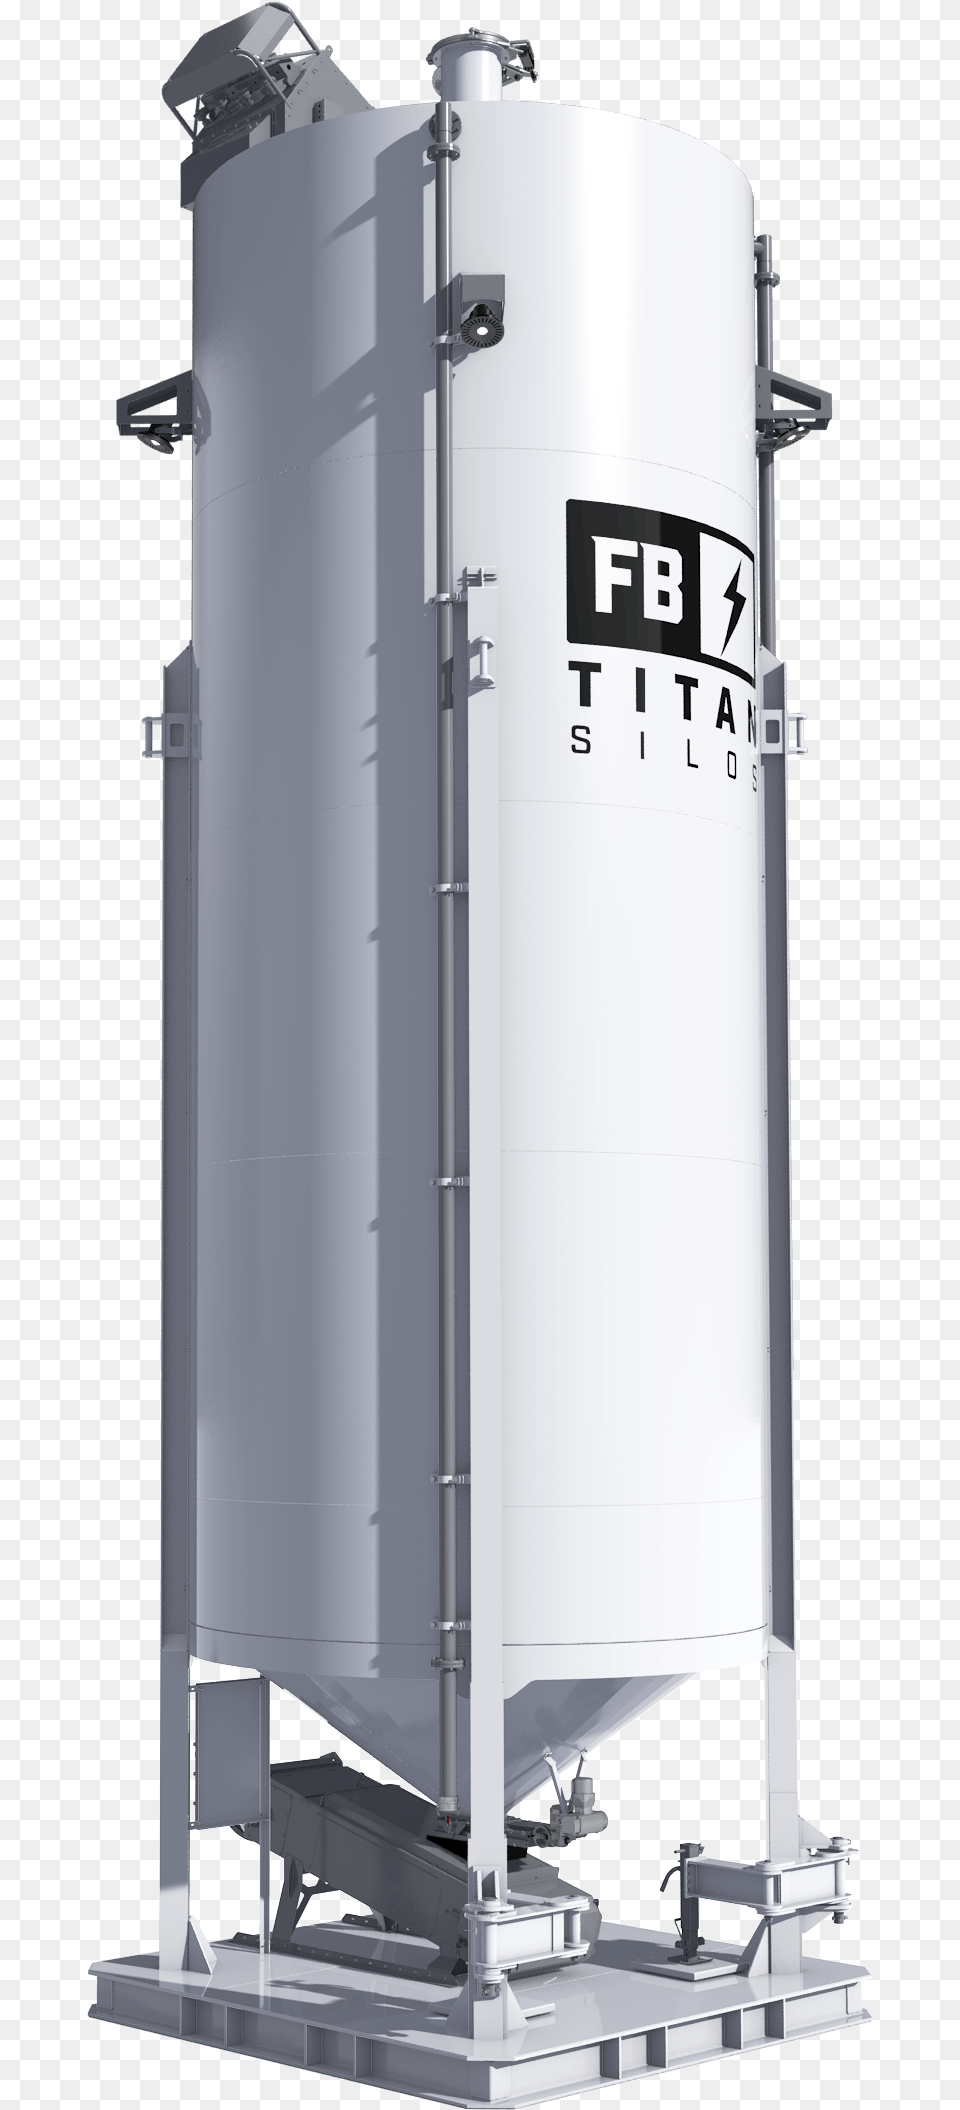 Titan Silo Ss 280 Refrigerator Png Image